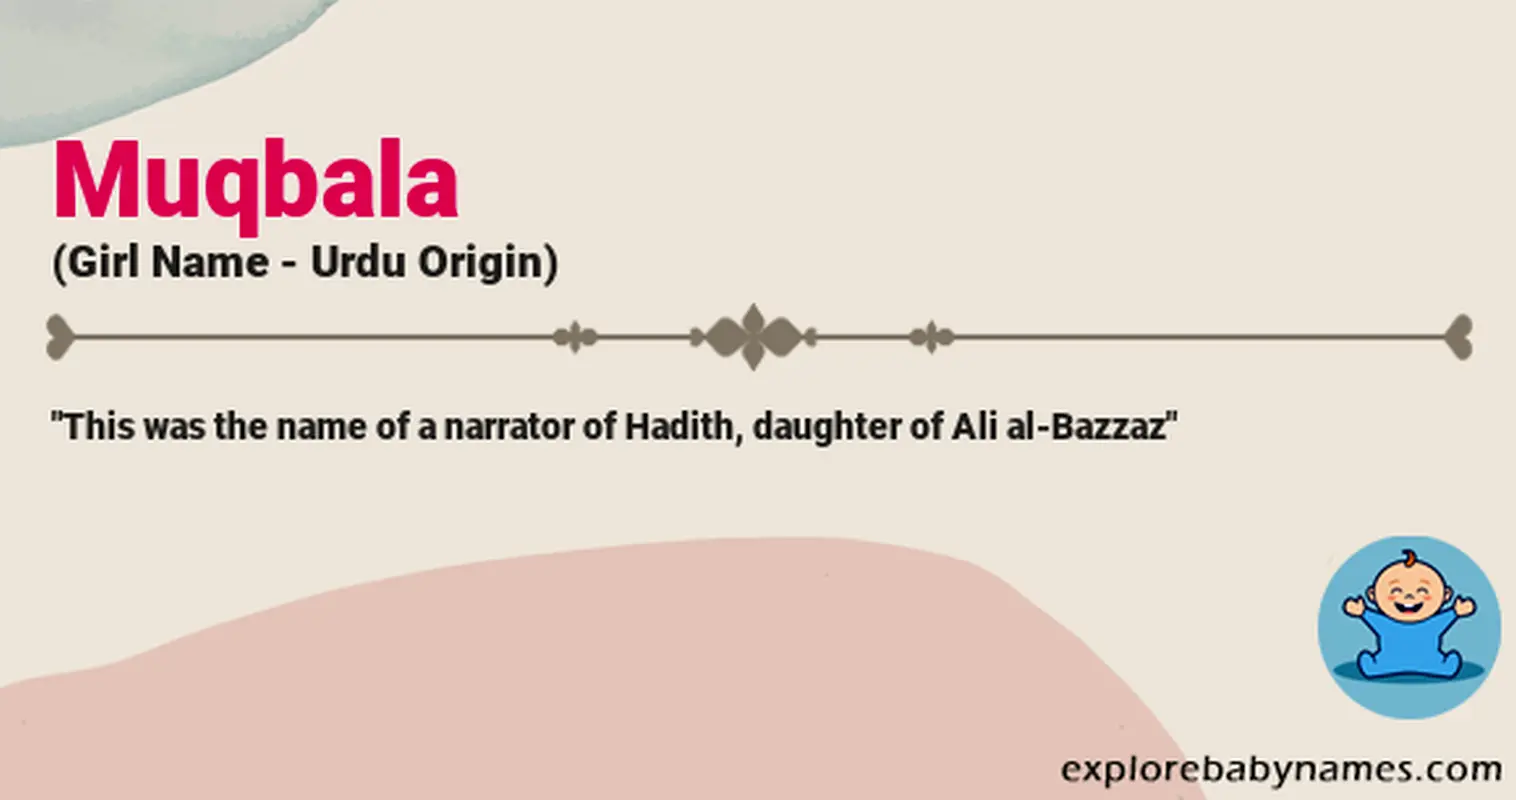 Meaning of Muqbala